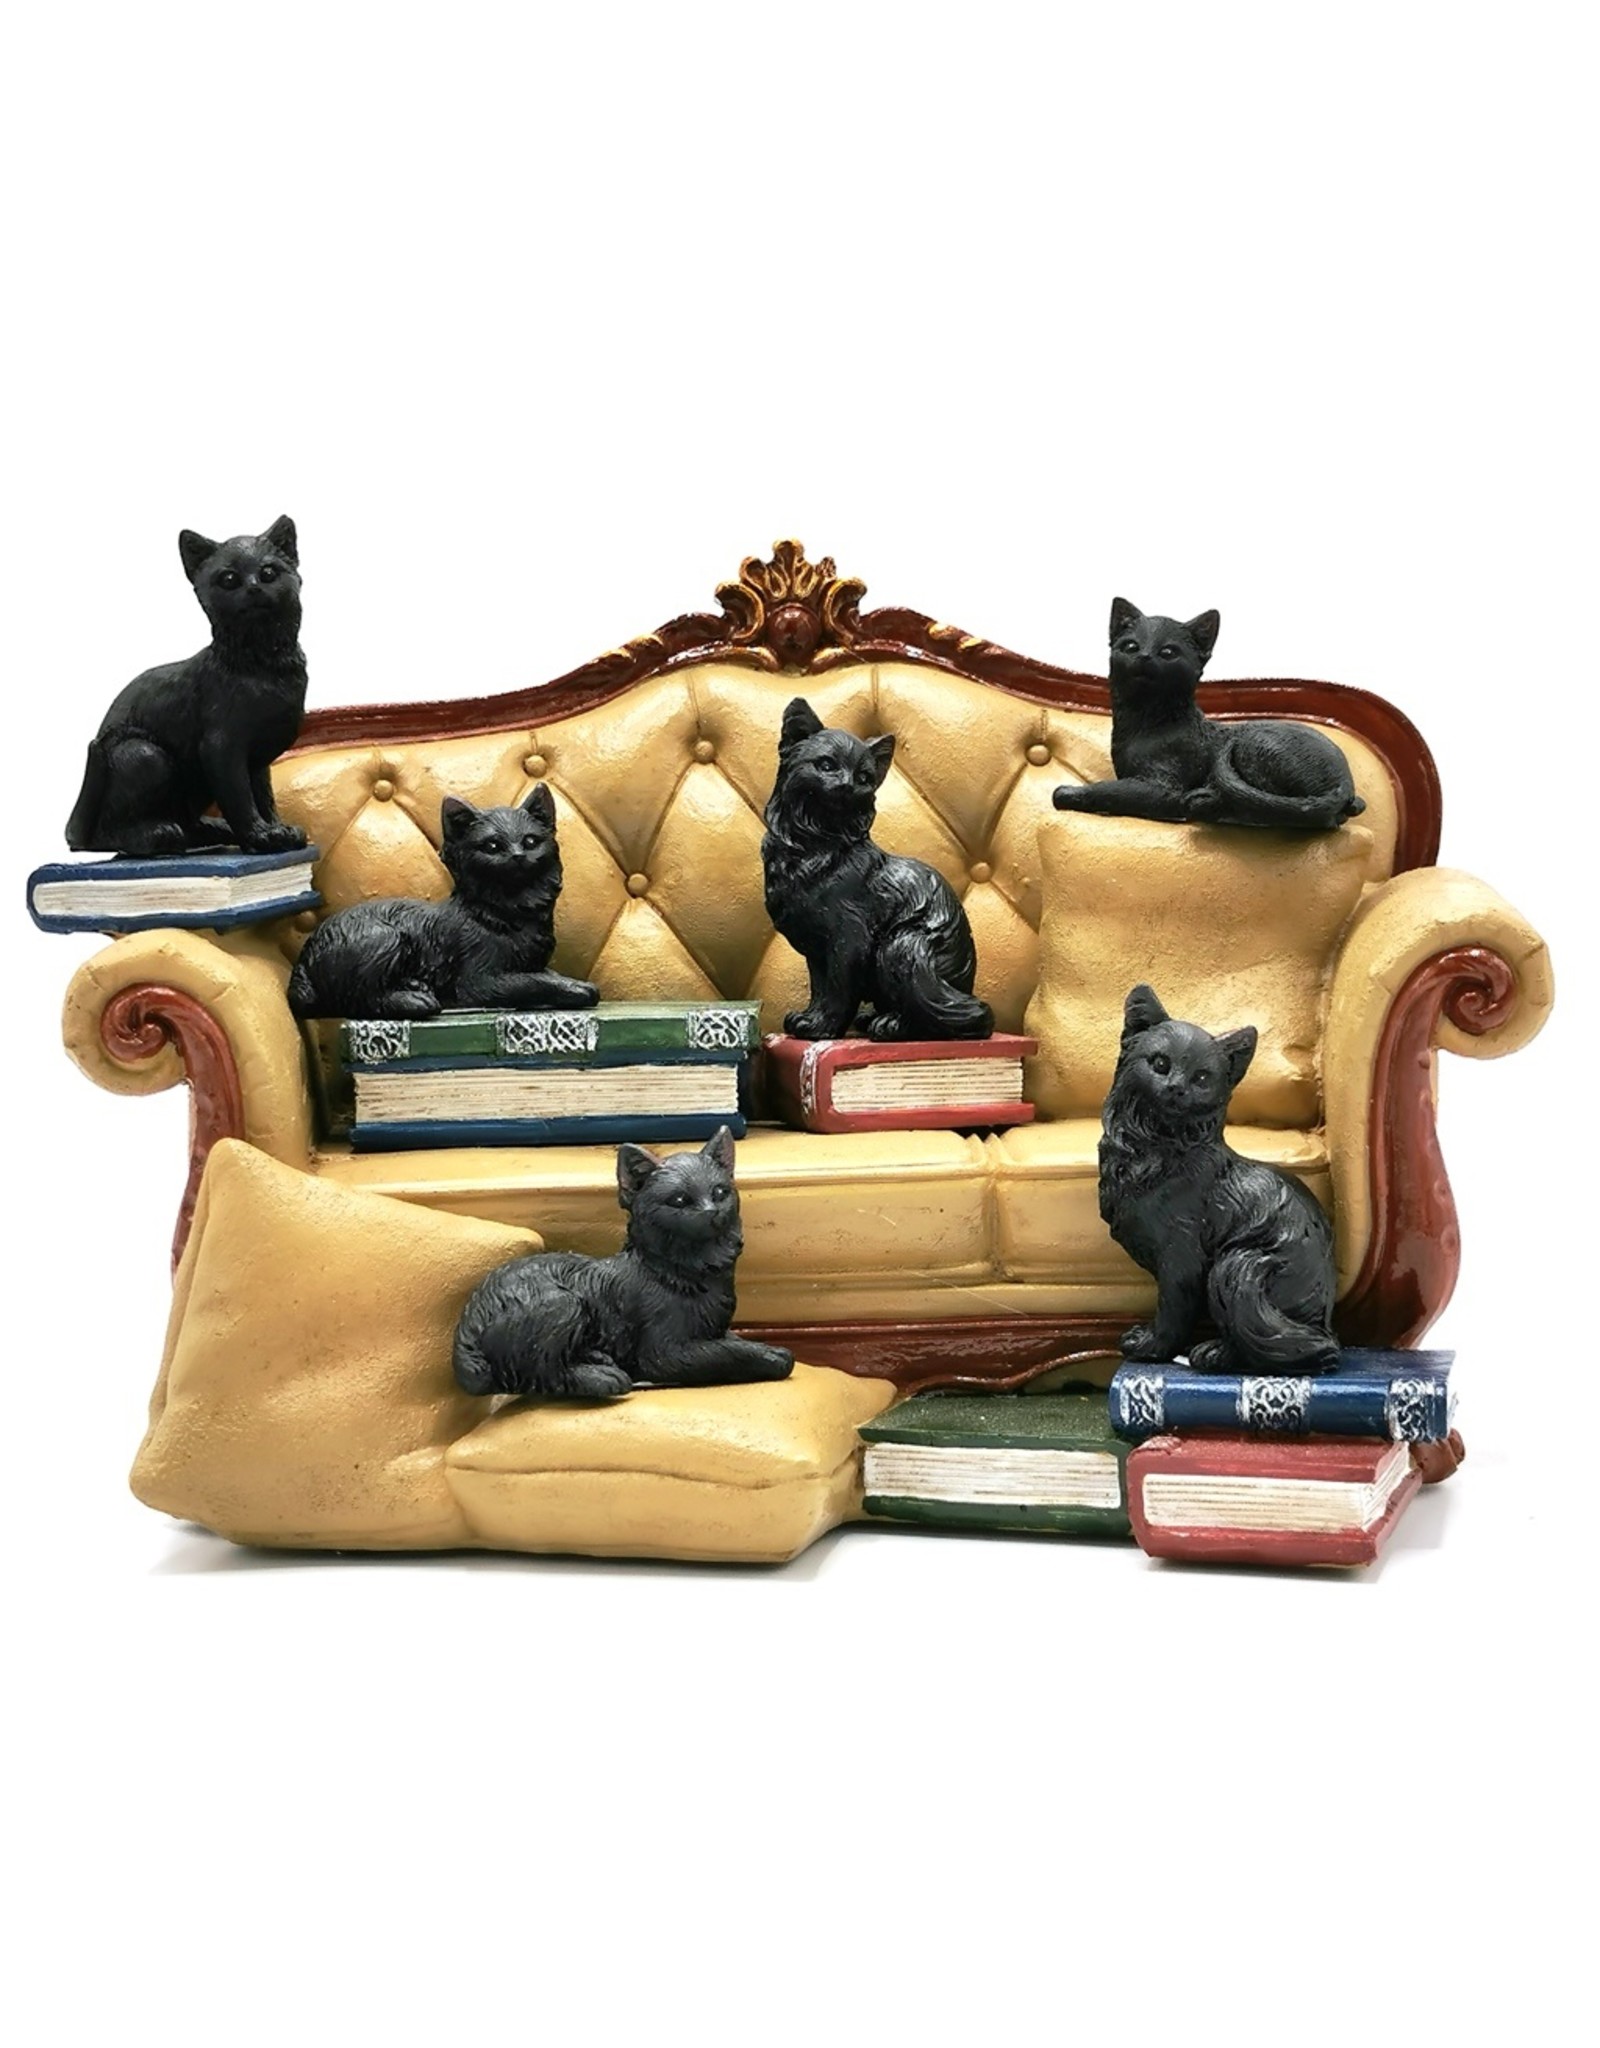 Trukado Giftware & Lifestyle - Miniature Black Cats on the Sofa